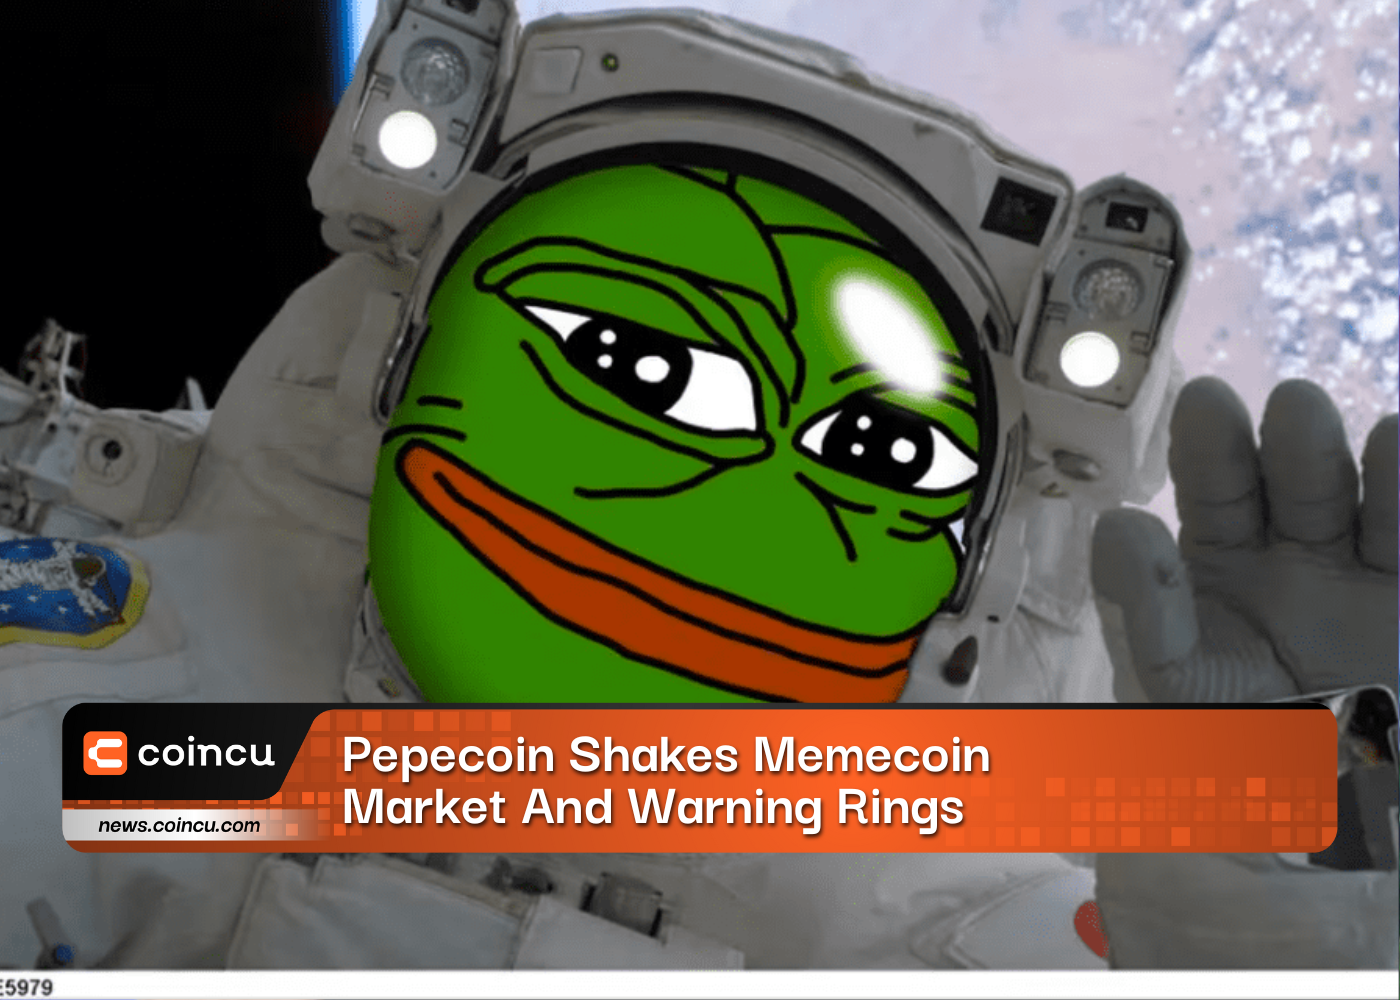 Pepecoin Shakes Memecoin Market And Warning Rings